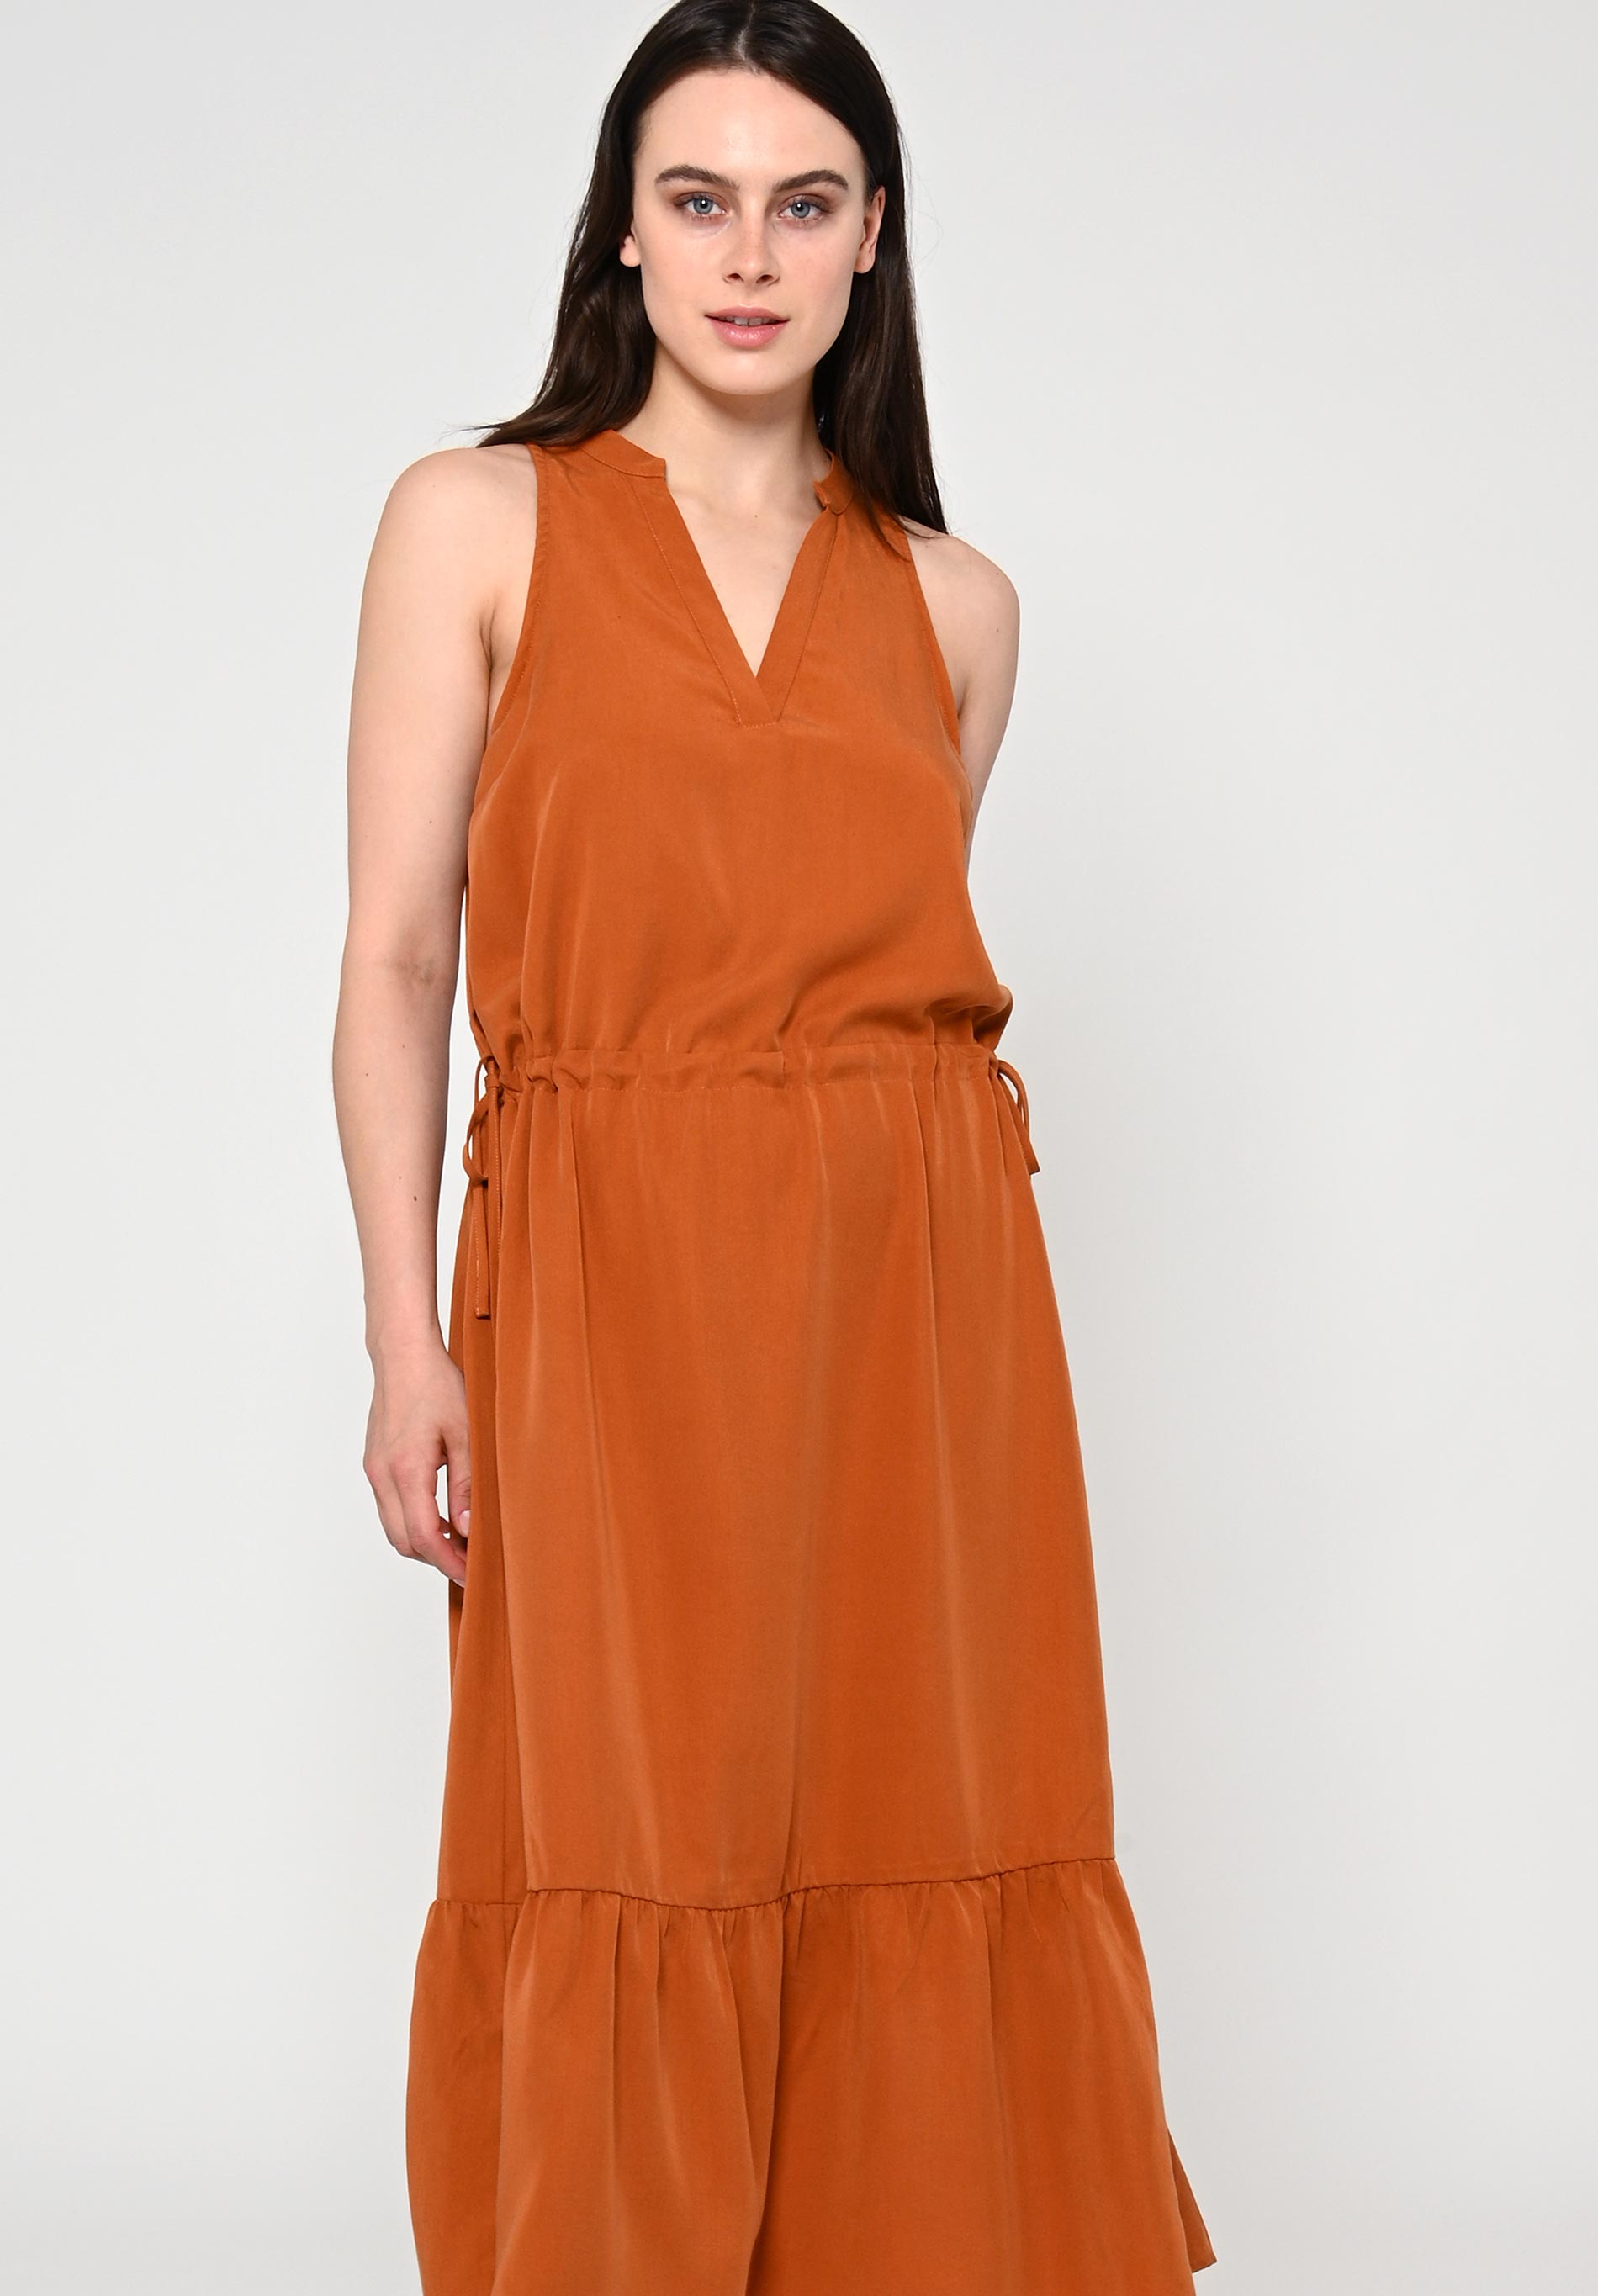 Maxi dress RAMARIA in dark amber by LOVJOI made of Tencel™